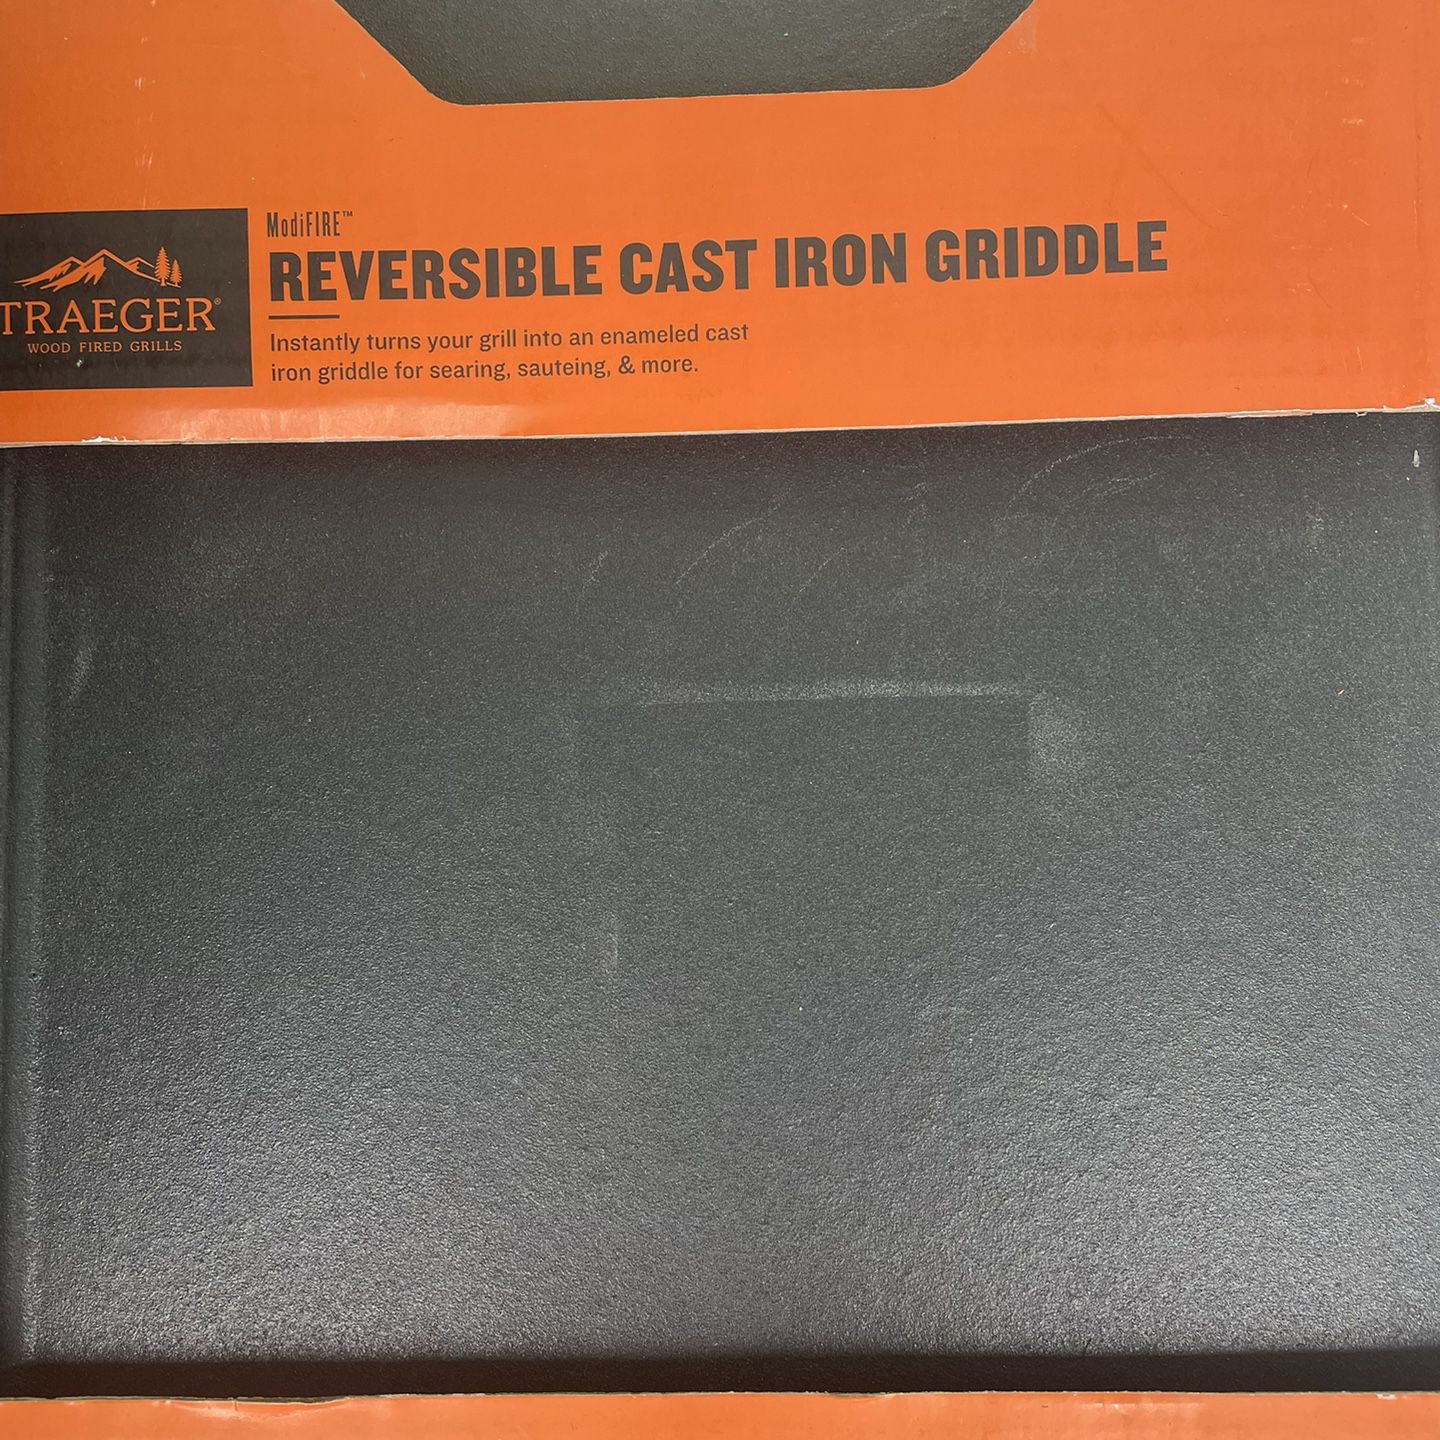 Traeger Modifire Reversible Cast Iron Griddle